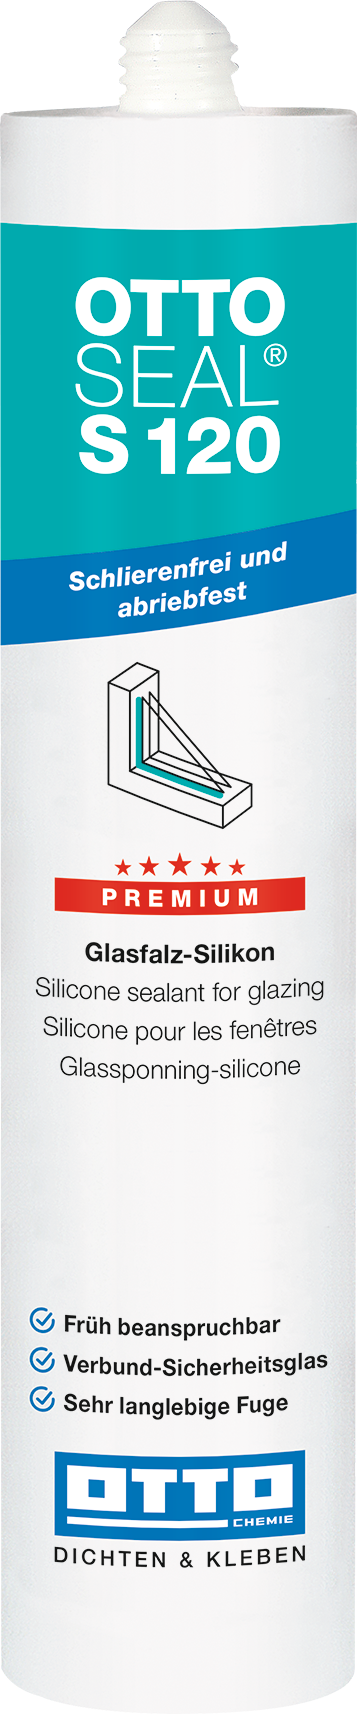 OTTOSEAL® S120 Das Premium-Alkoxy-Fenster-Silicon 310 ml